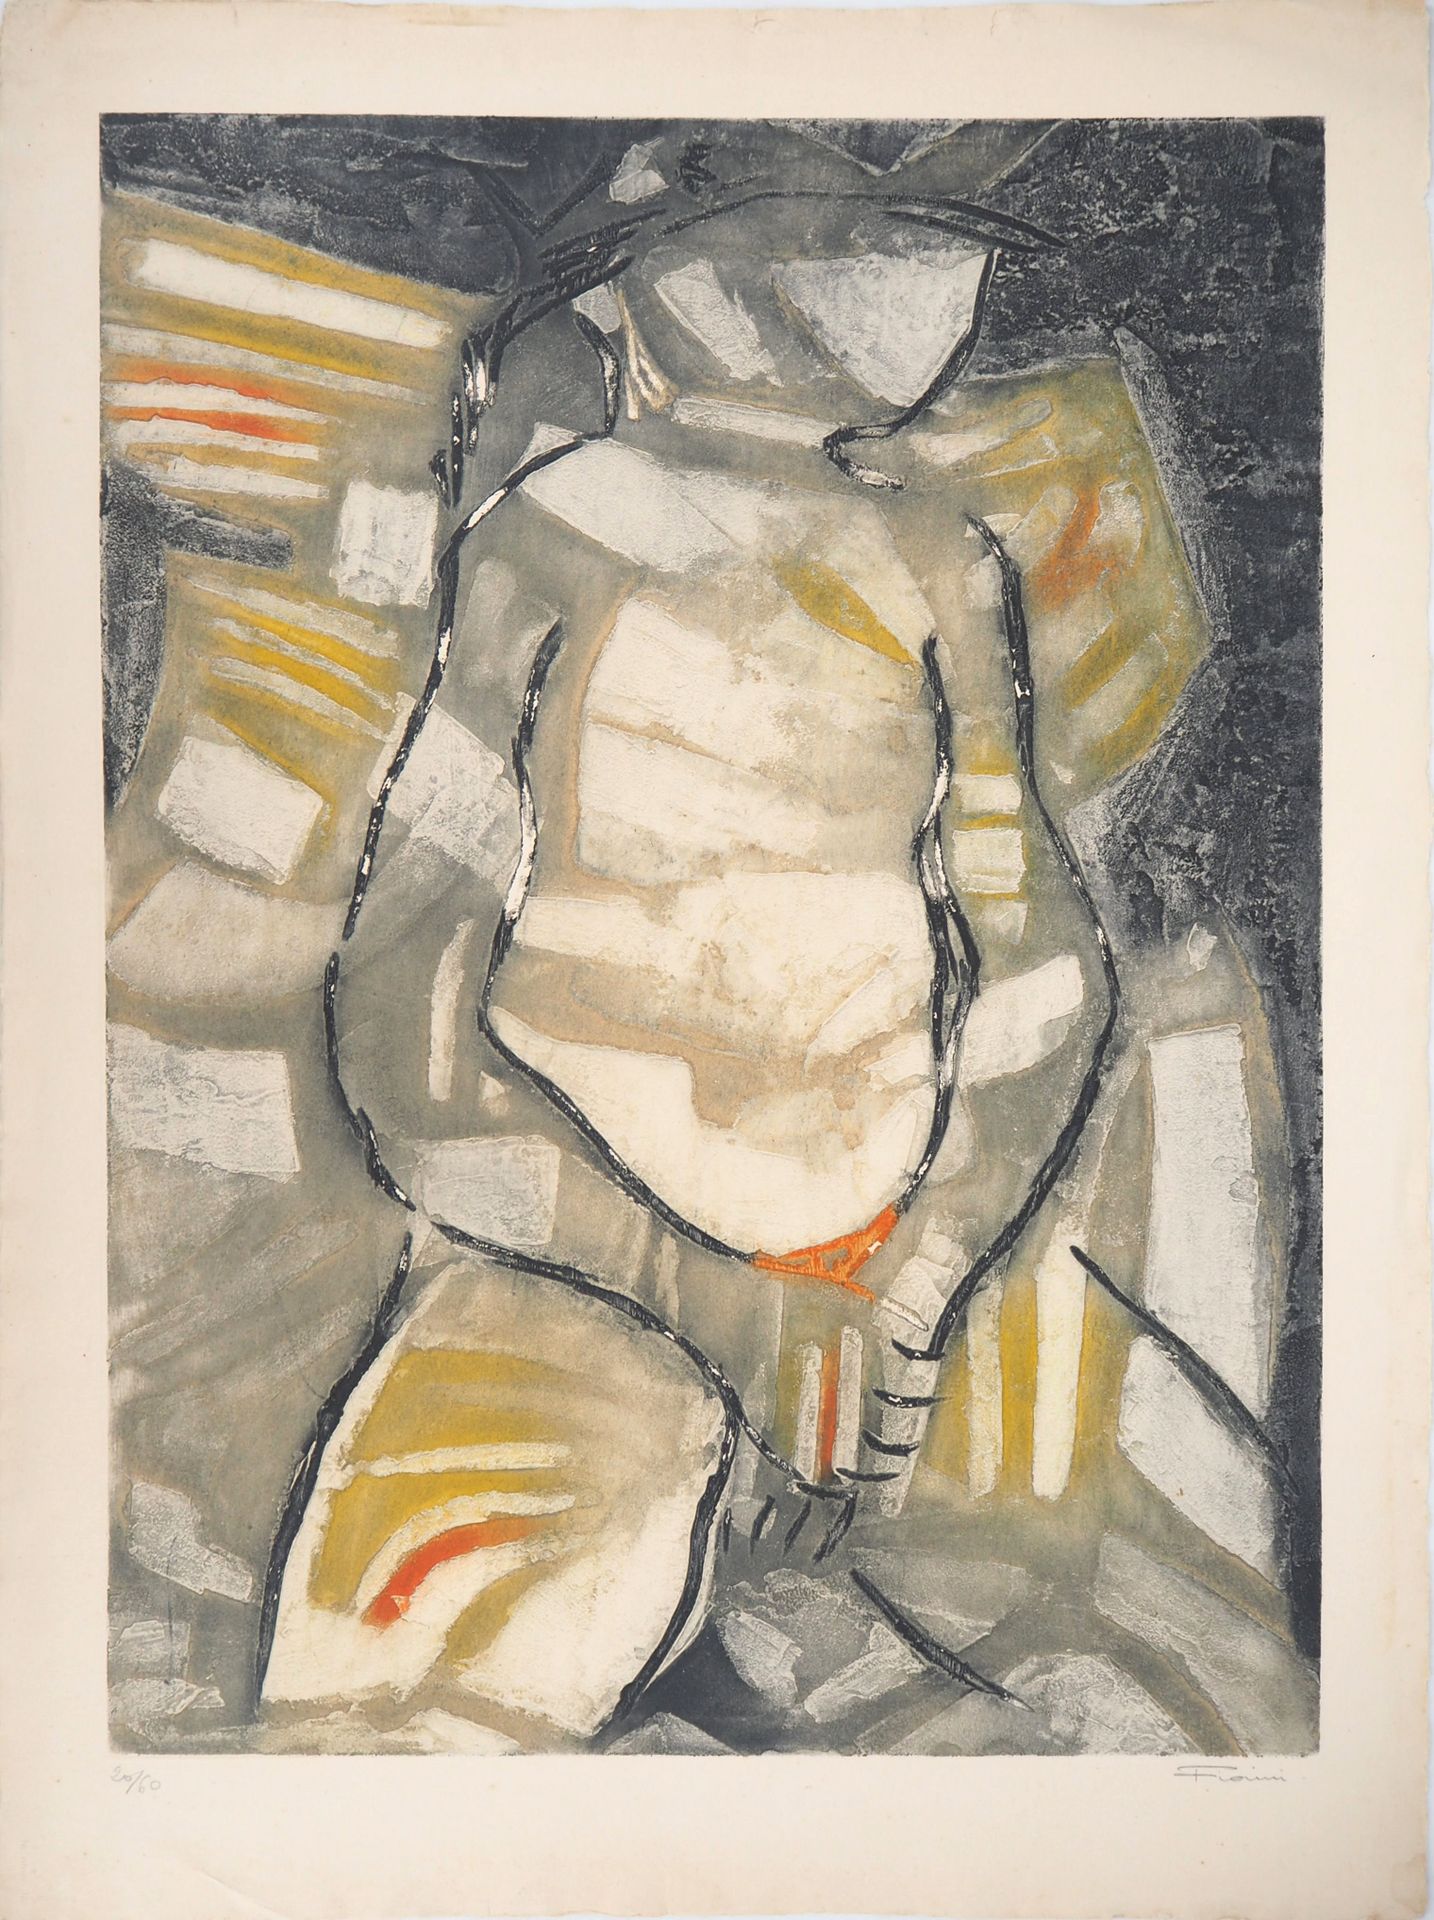 Marcel FIoRINI 马塞尔-菲奥里尼 (1922-2008)

坐着的女人

原创木刻版画

用铅笔签名

编号为/60前。

奥弗涅羊皮纸上 57,&hellip;